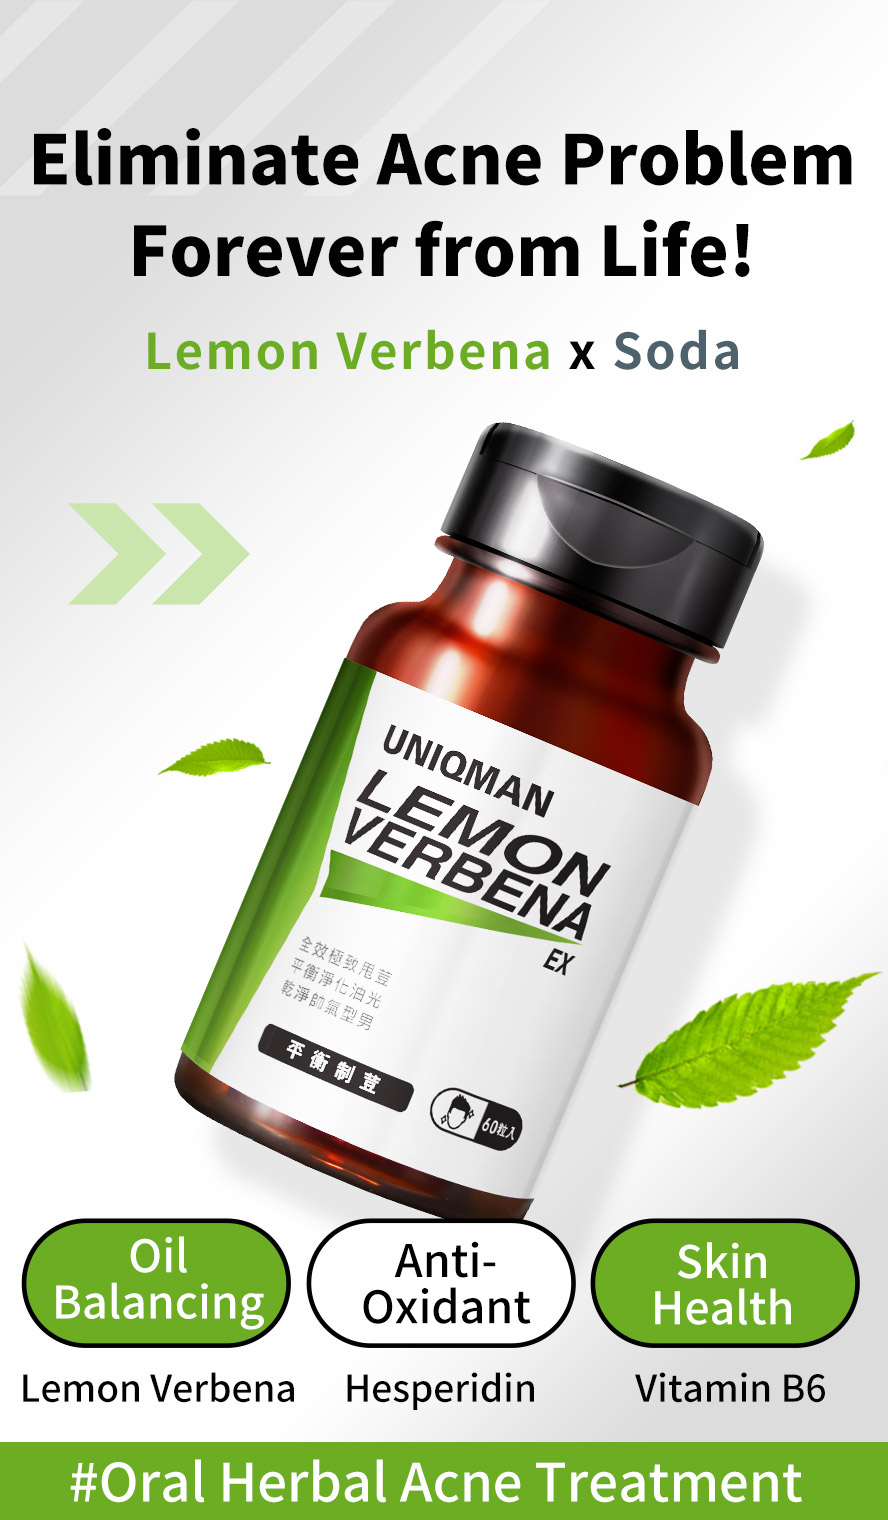 UNIQMAN Lemon Verbena EX balances skin oil-water, anti-aging, and acne treatment.